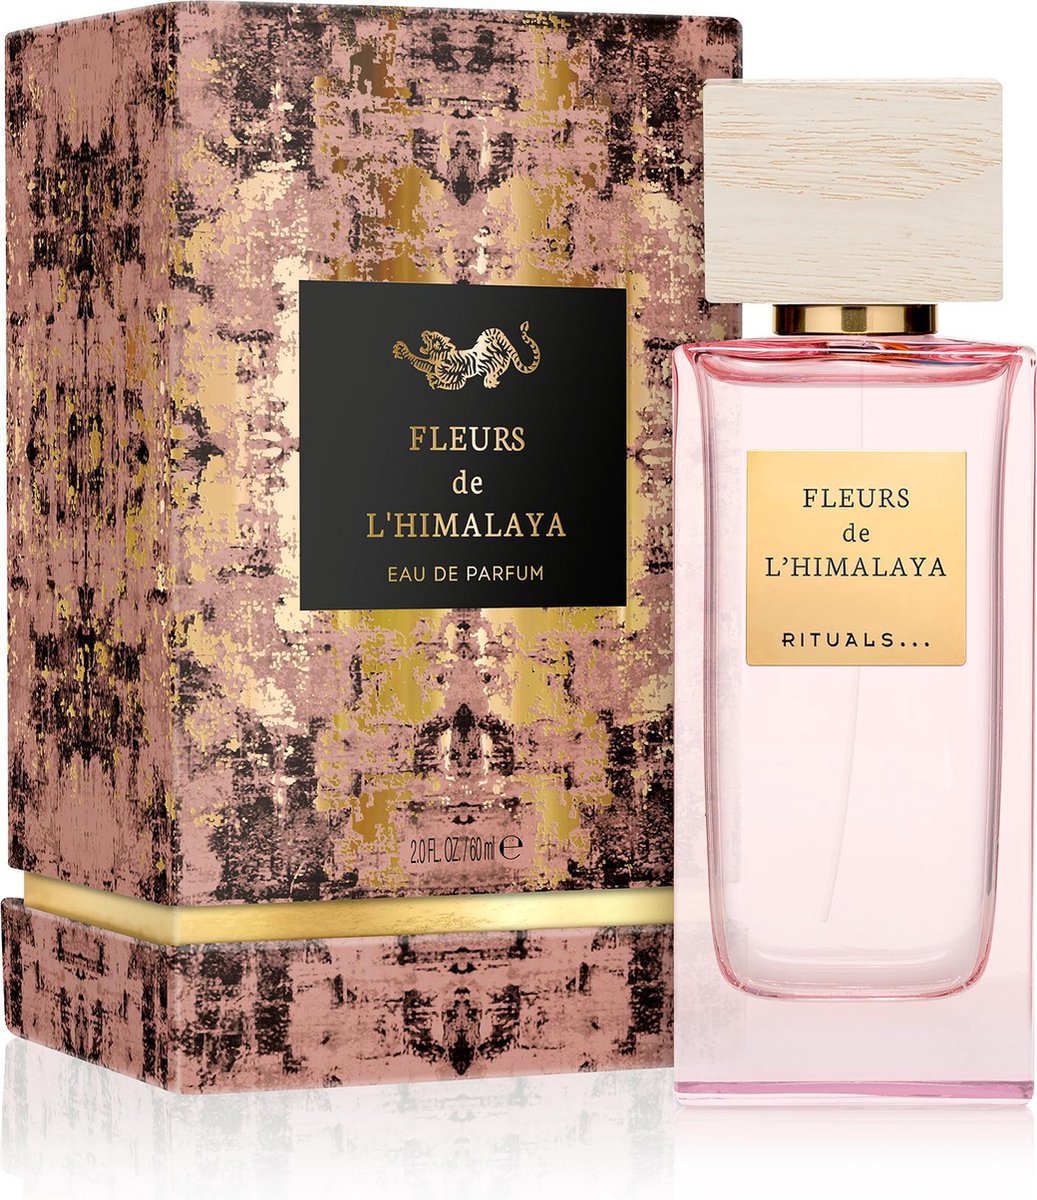 FLEURS DE L'HIMALAYA - Eau de parfum - RITUALS - Marionnaud